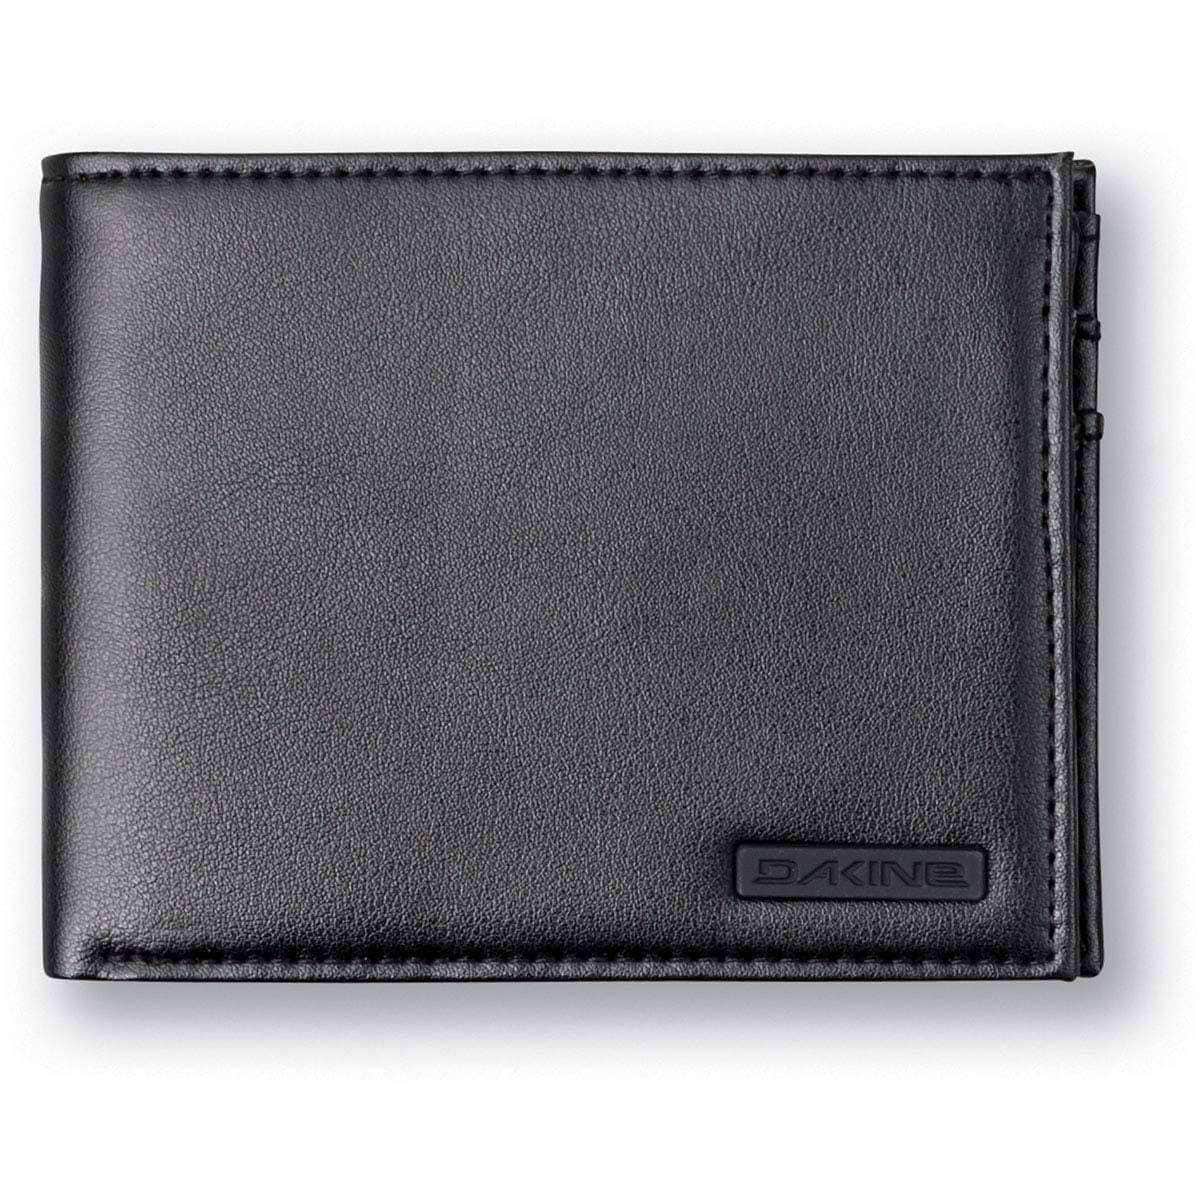 Dakine Archer Coin Leather Wallet - Black - Mens Wallet by Dakine